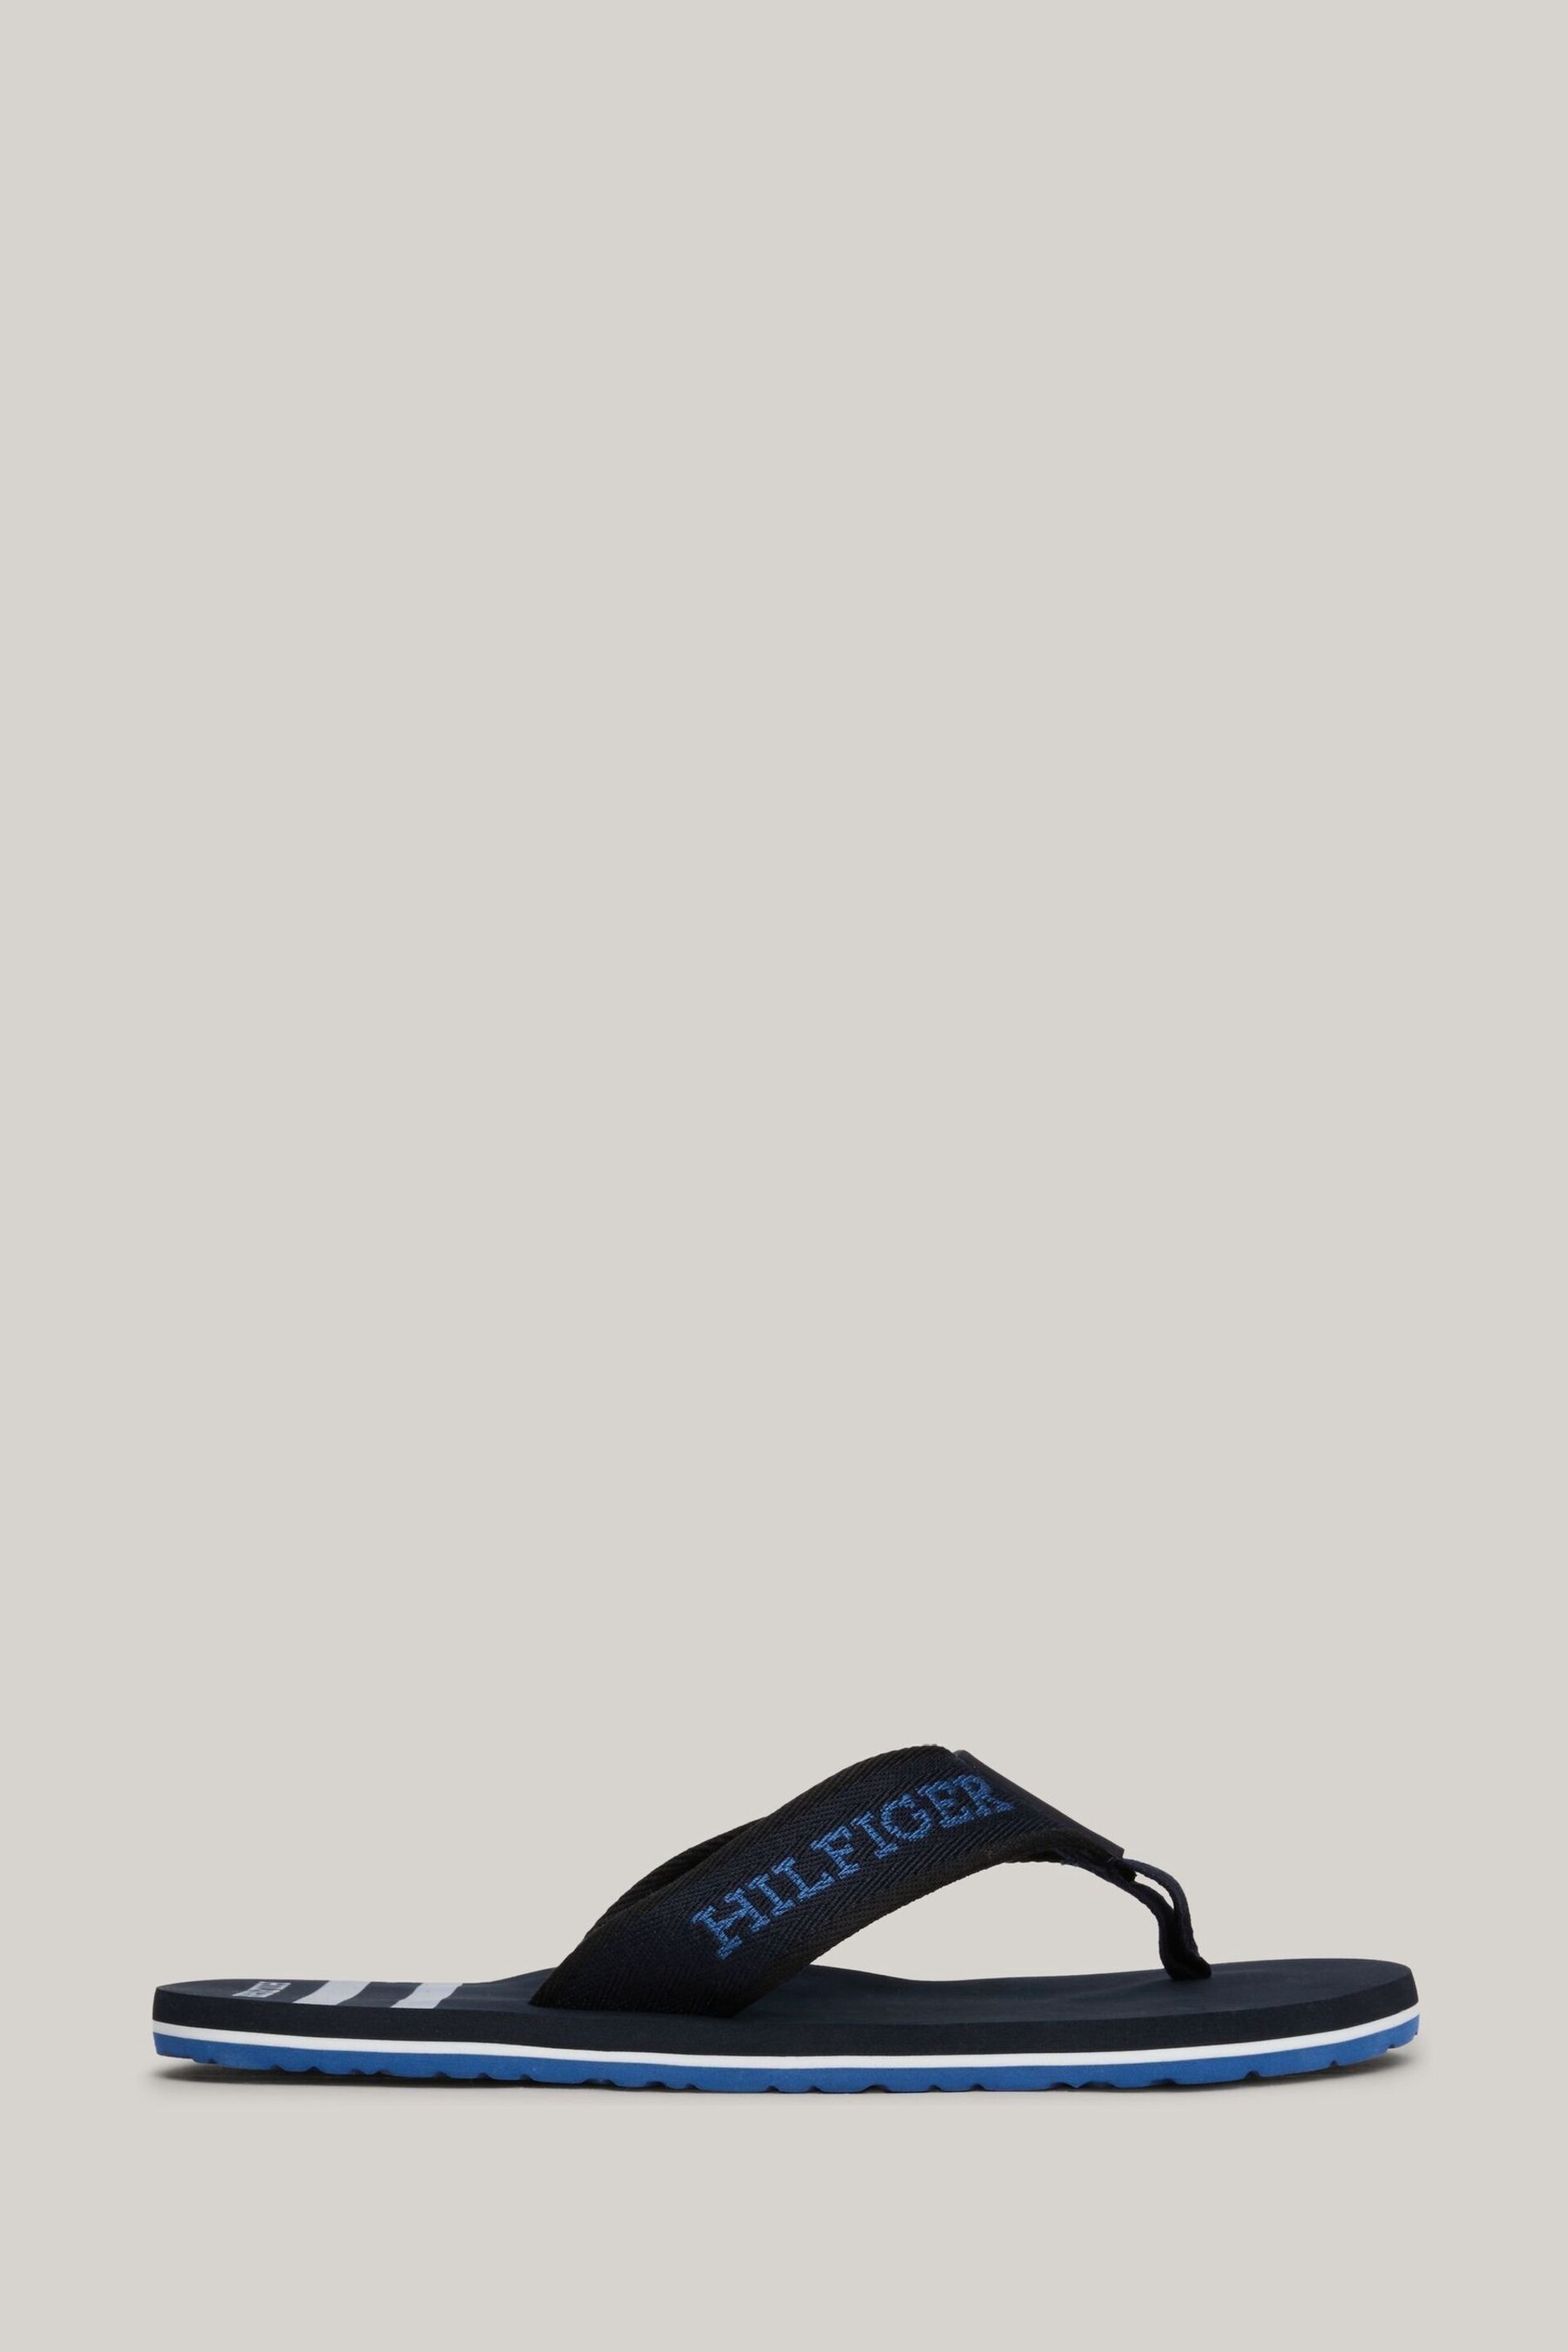 Tommy Hilfiger Blue Sporty Hilfiger Beach Sandals - Image 1 of 6